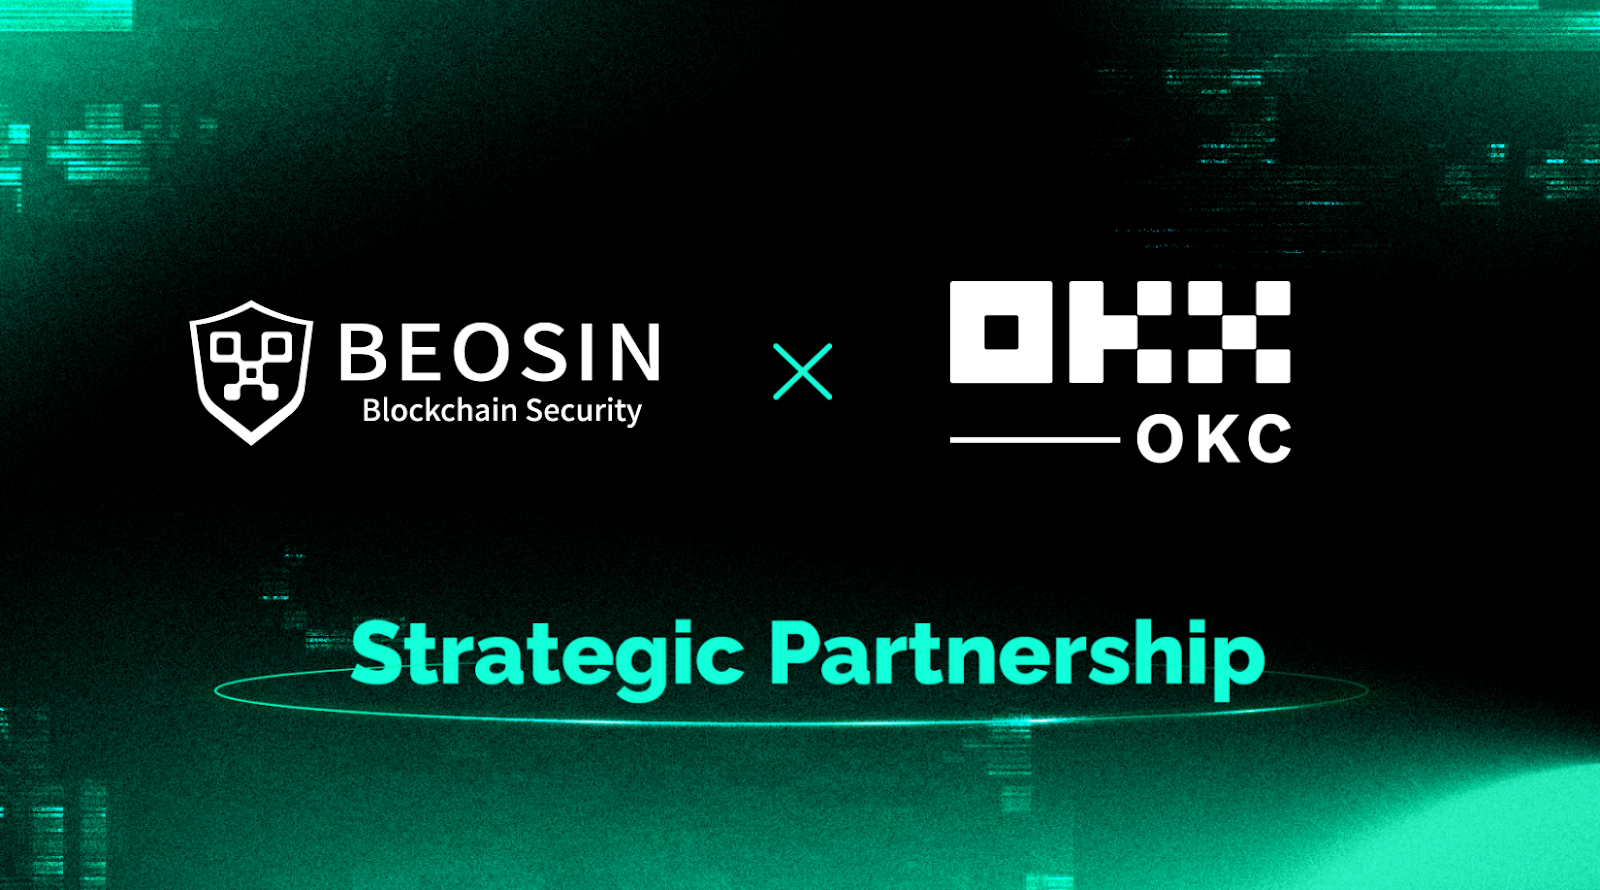 Beosin and OKC (OKX Chain) have entered into a strategic partnership